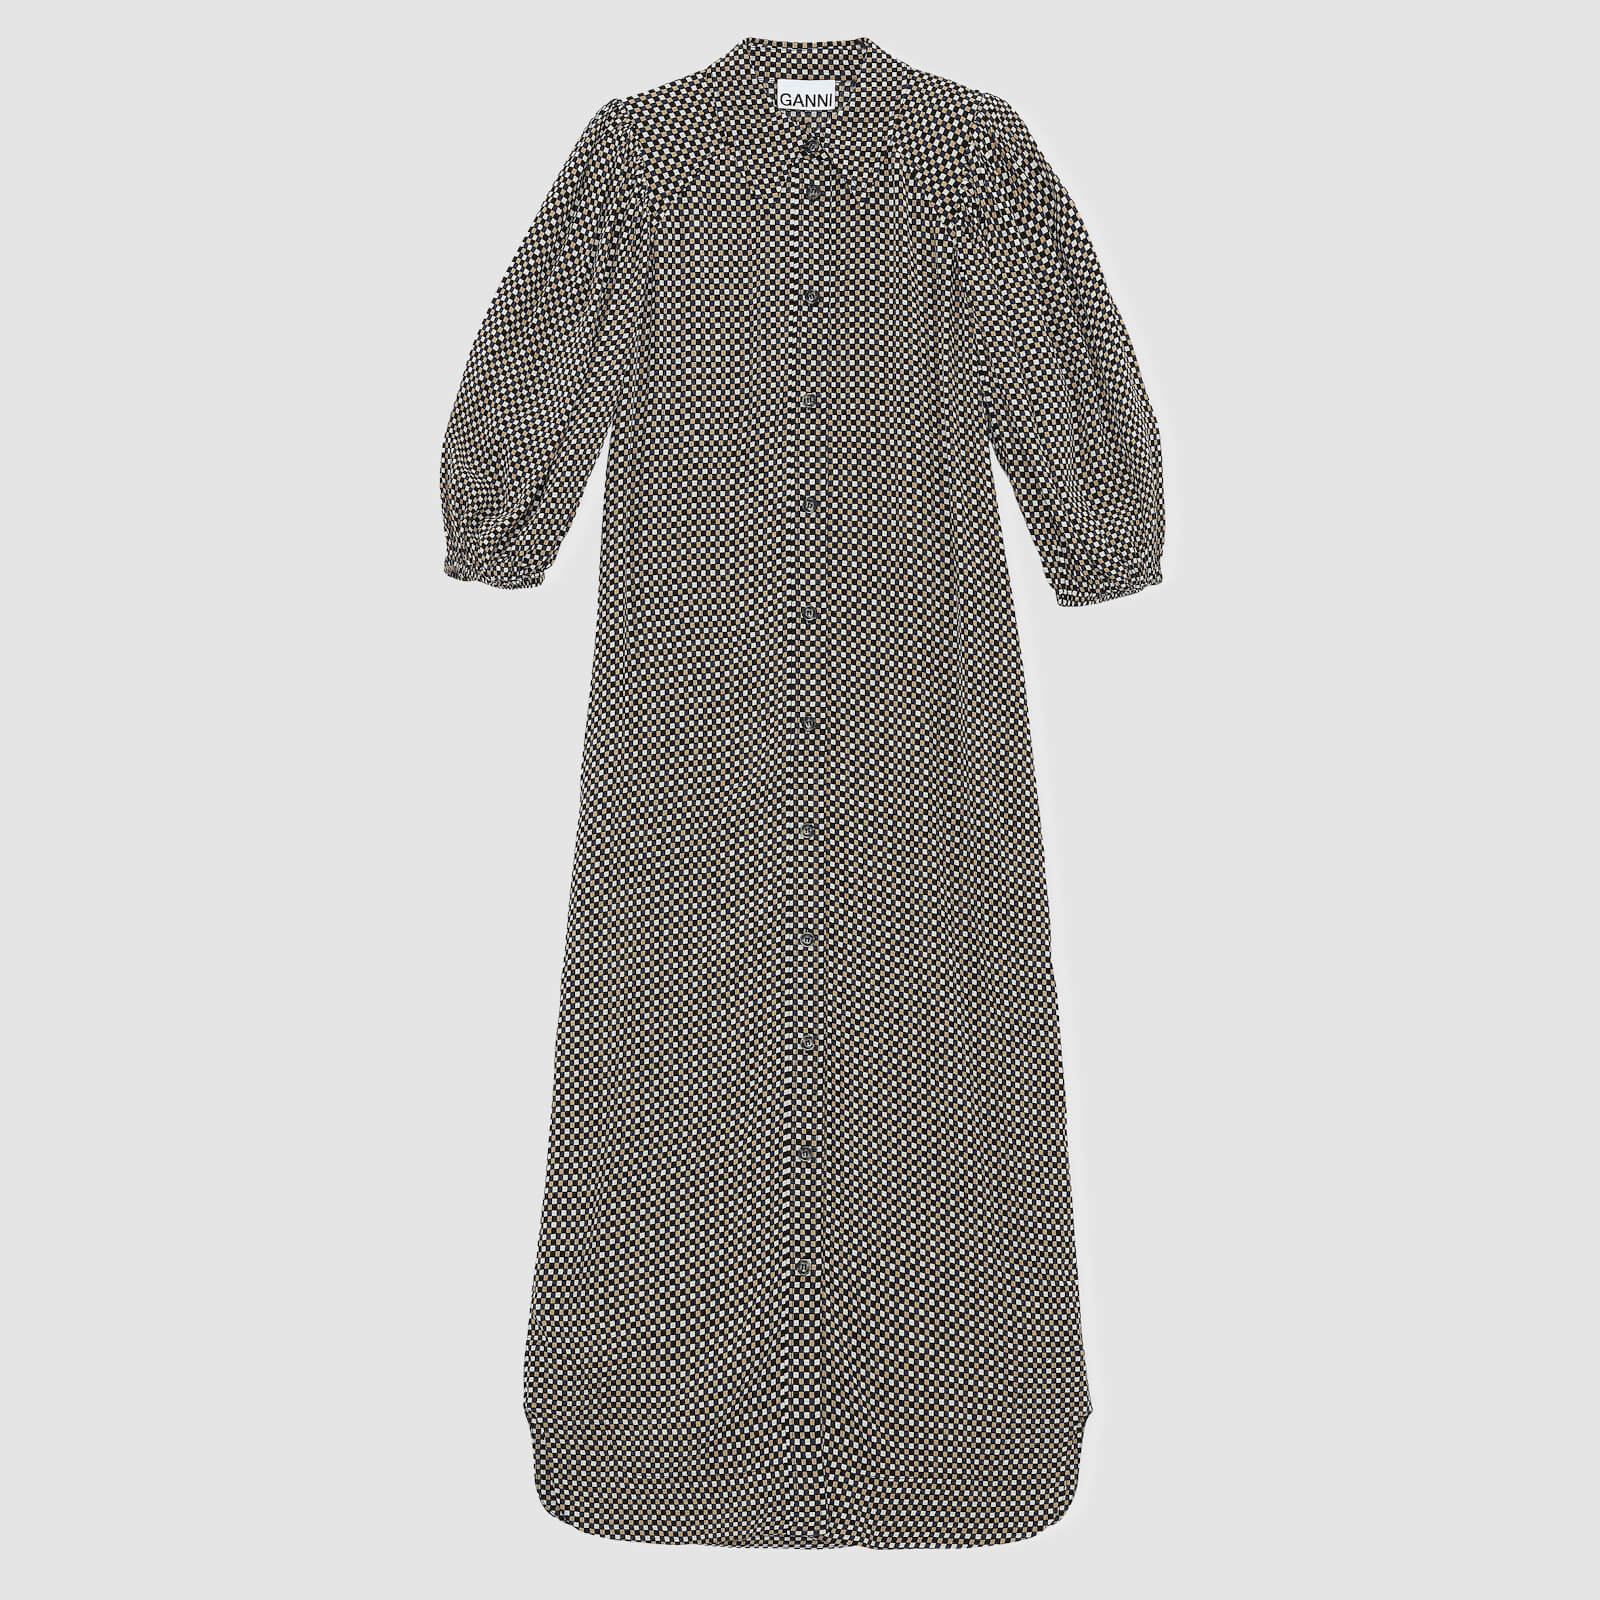 Ganni Women's Printed Crepe Midi Dress - Tannin - EU 38/UK 10